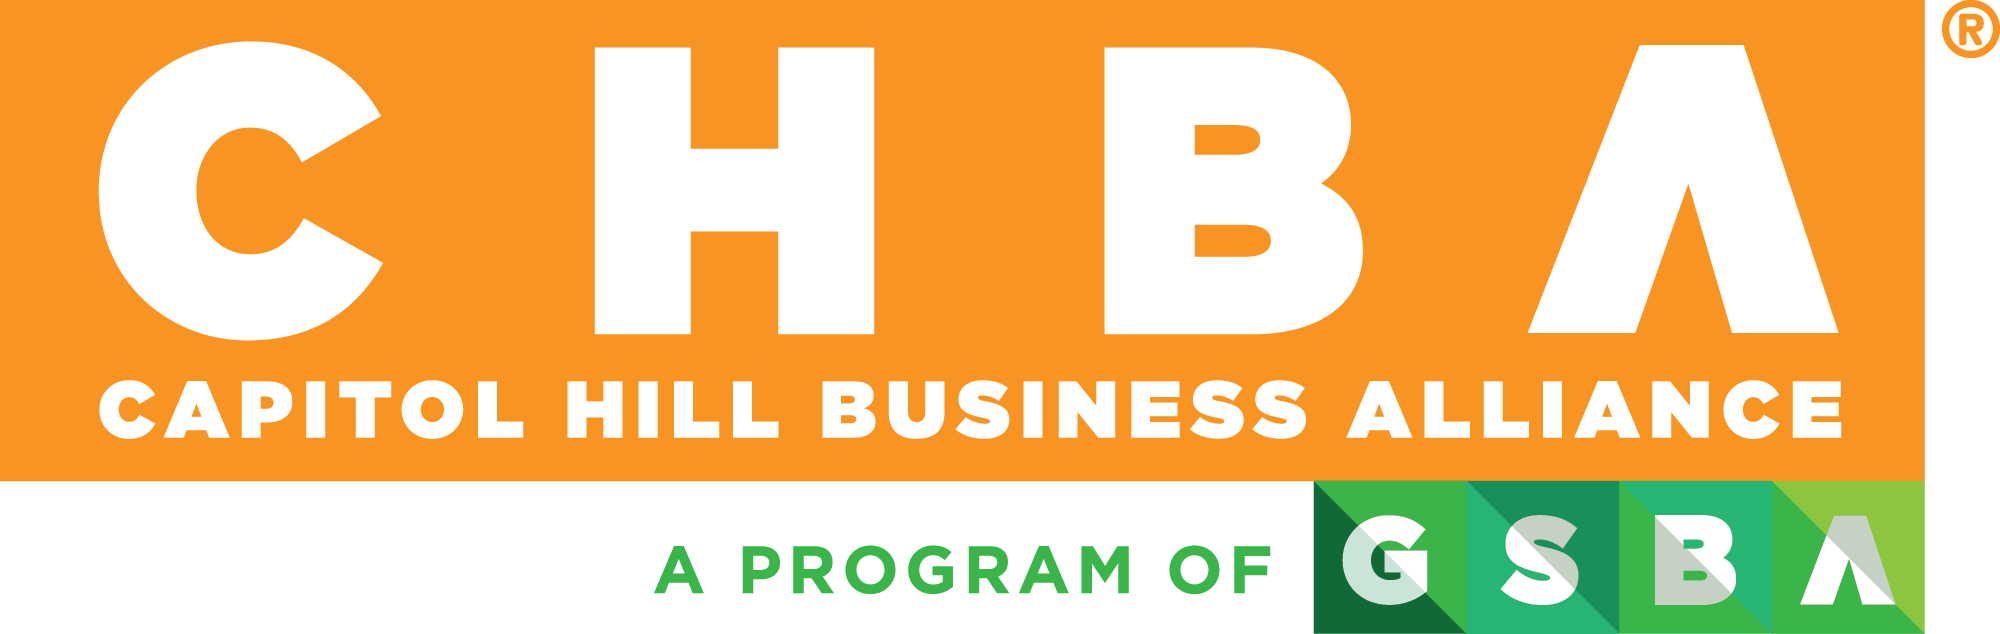 CHBA: Capitol Hill Business Alliance, a program of GSBA